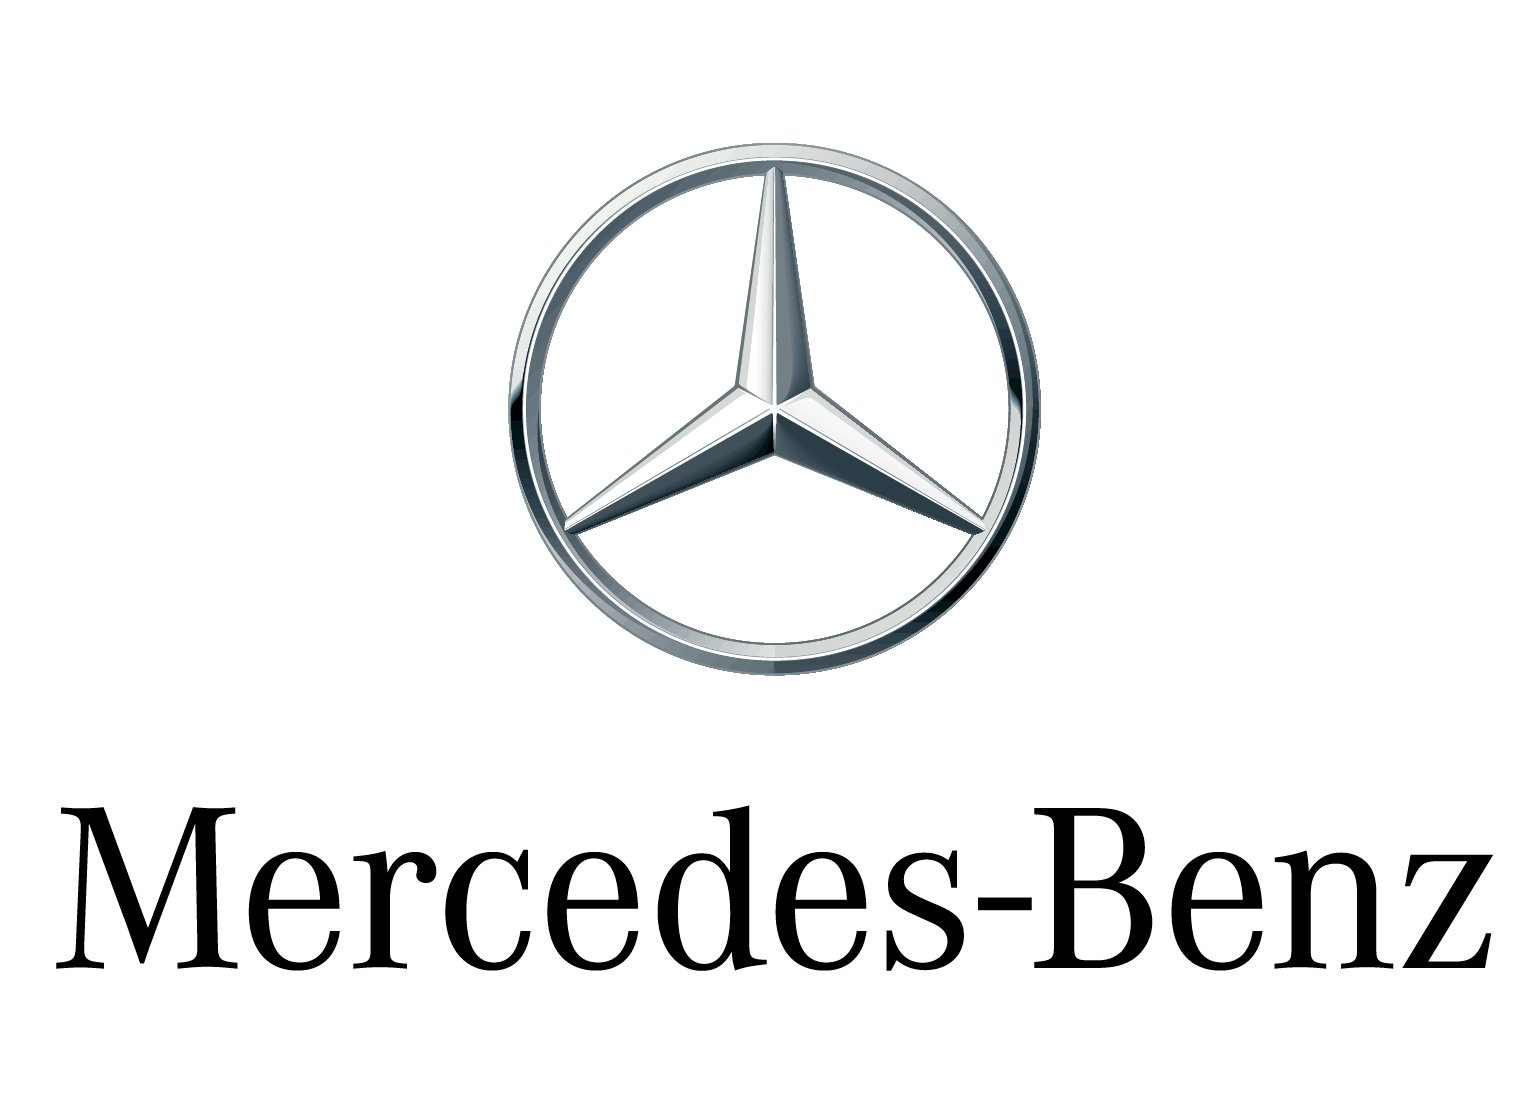 Tải logo Mercedes-Benz file vector, AI, EPS, SVG, PNG